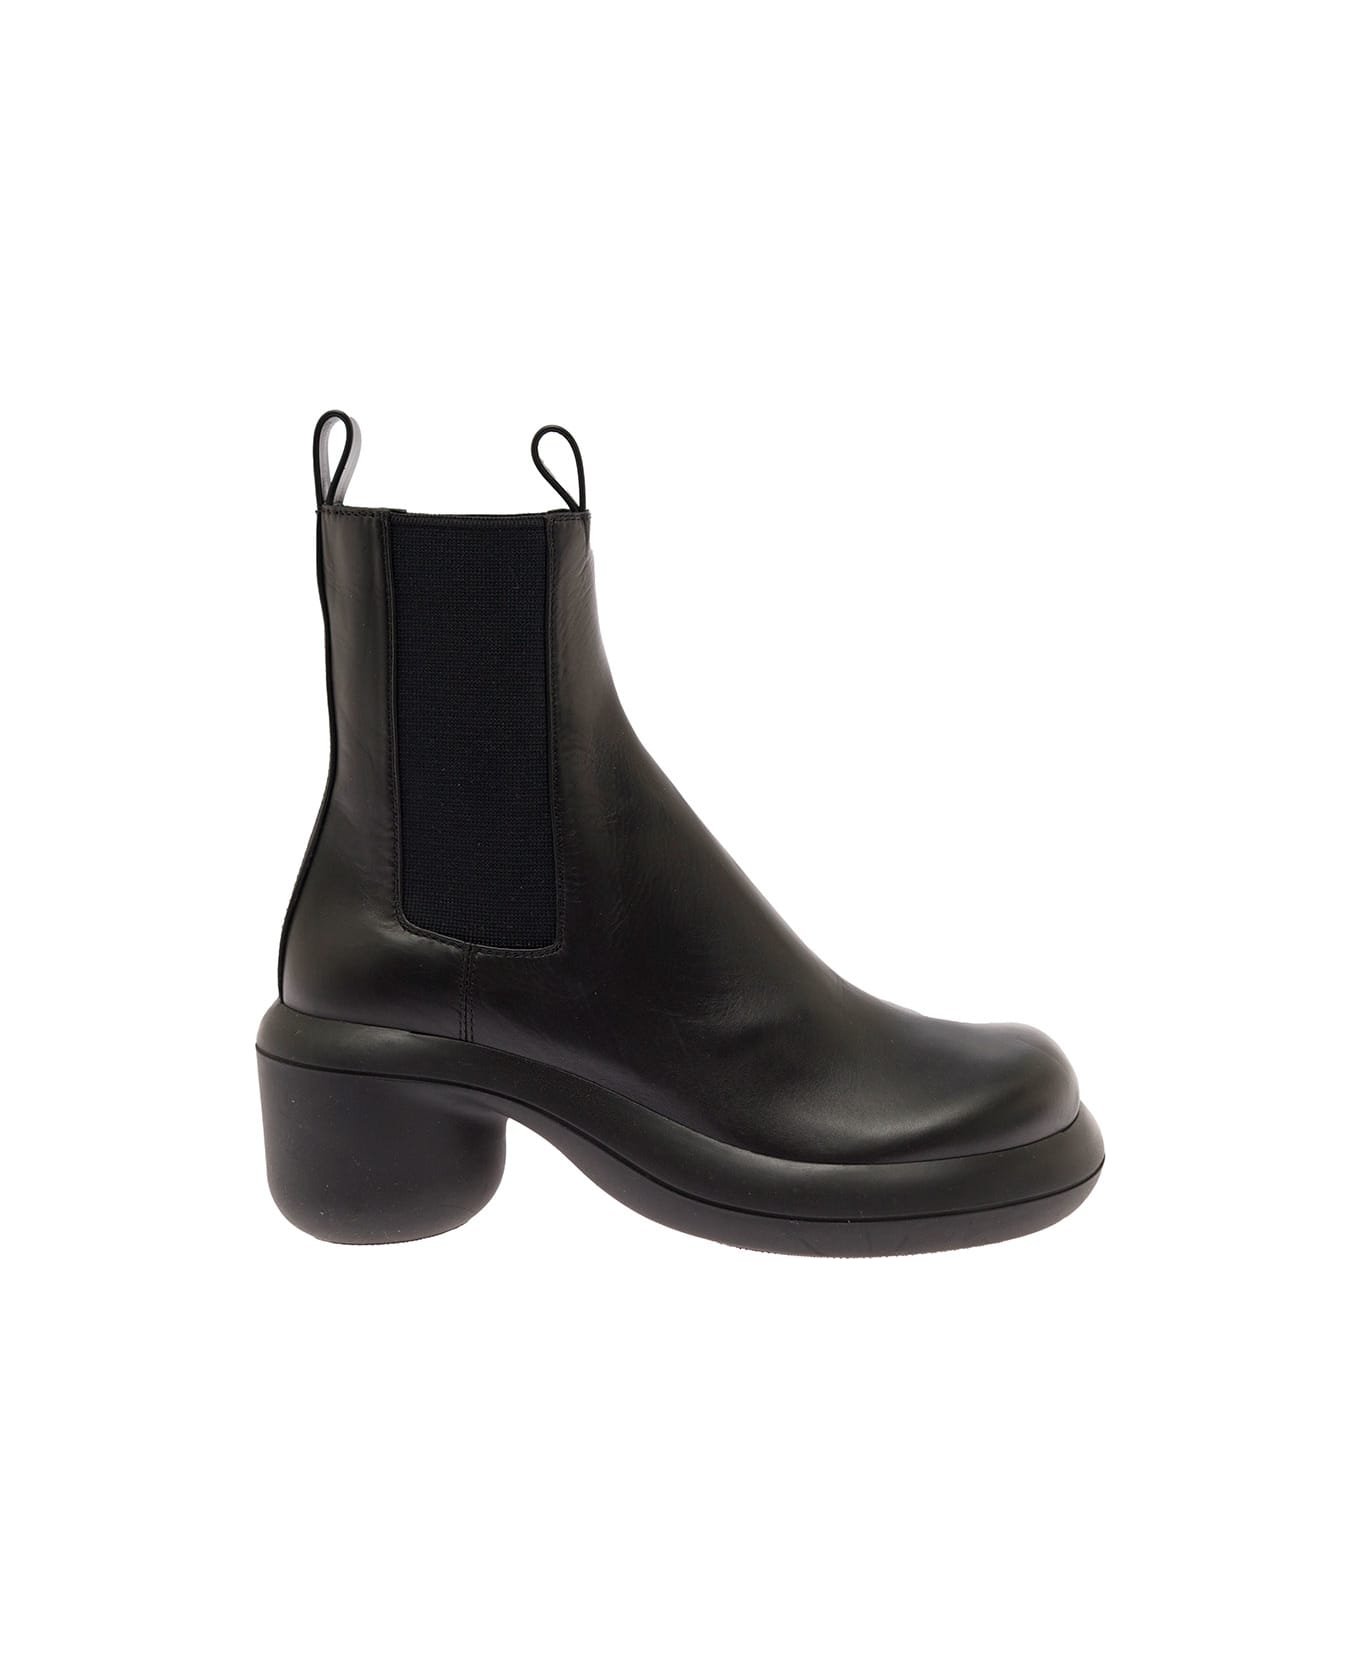 Jil Sander Black Leather Chelsea Boots Woman - Black